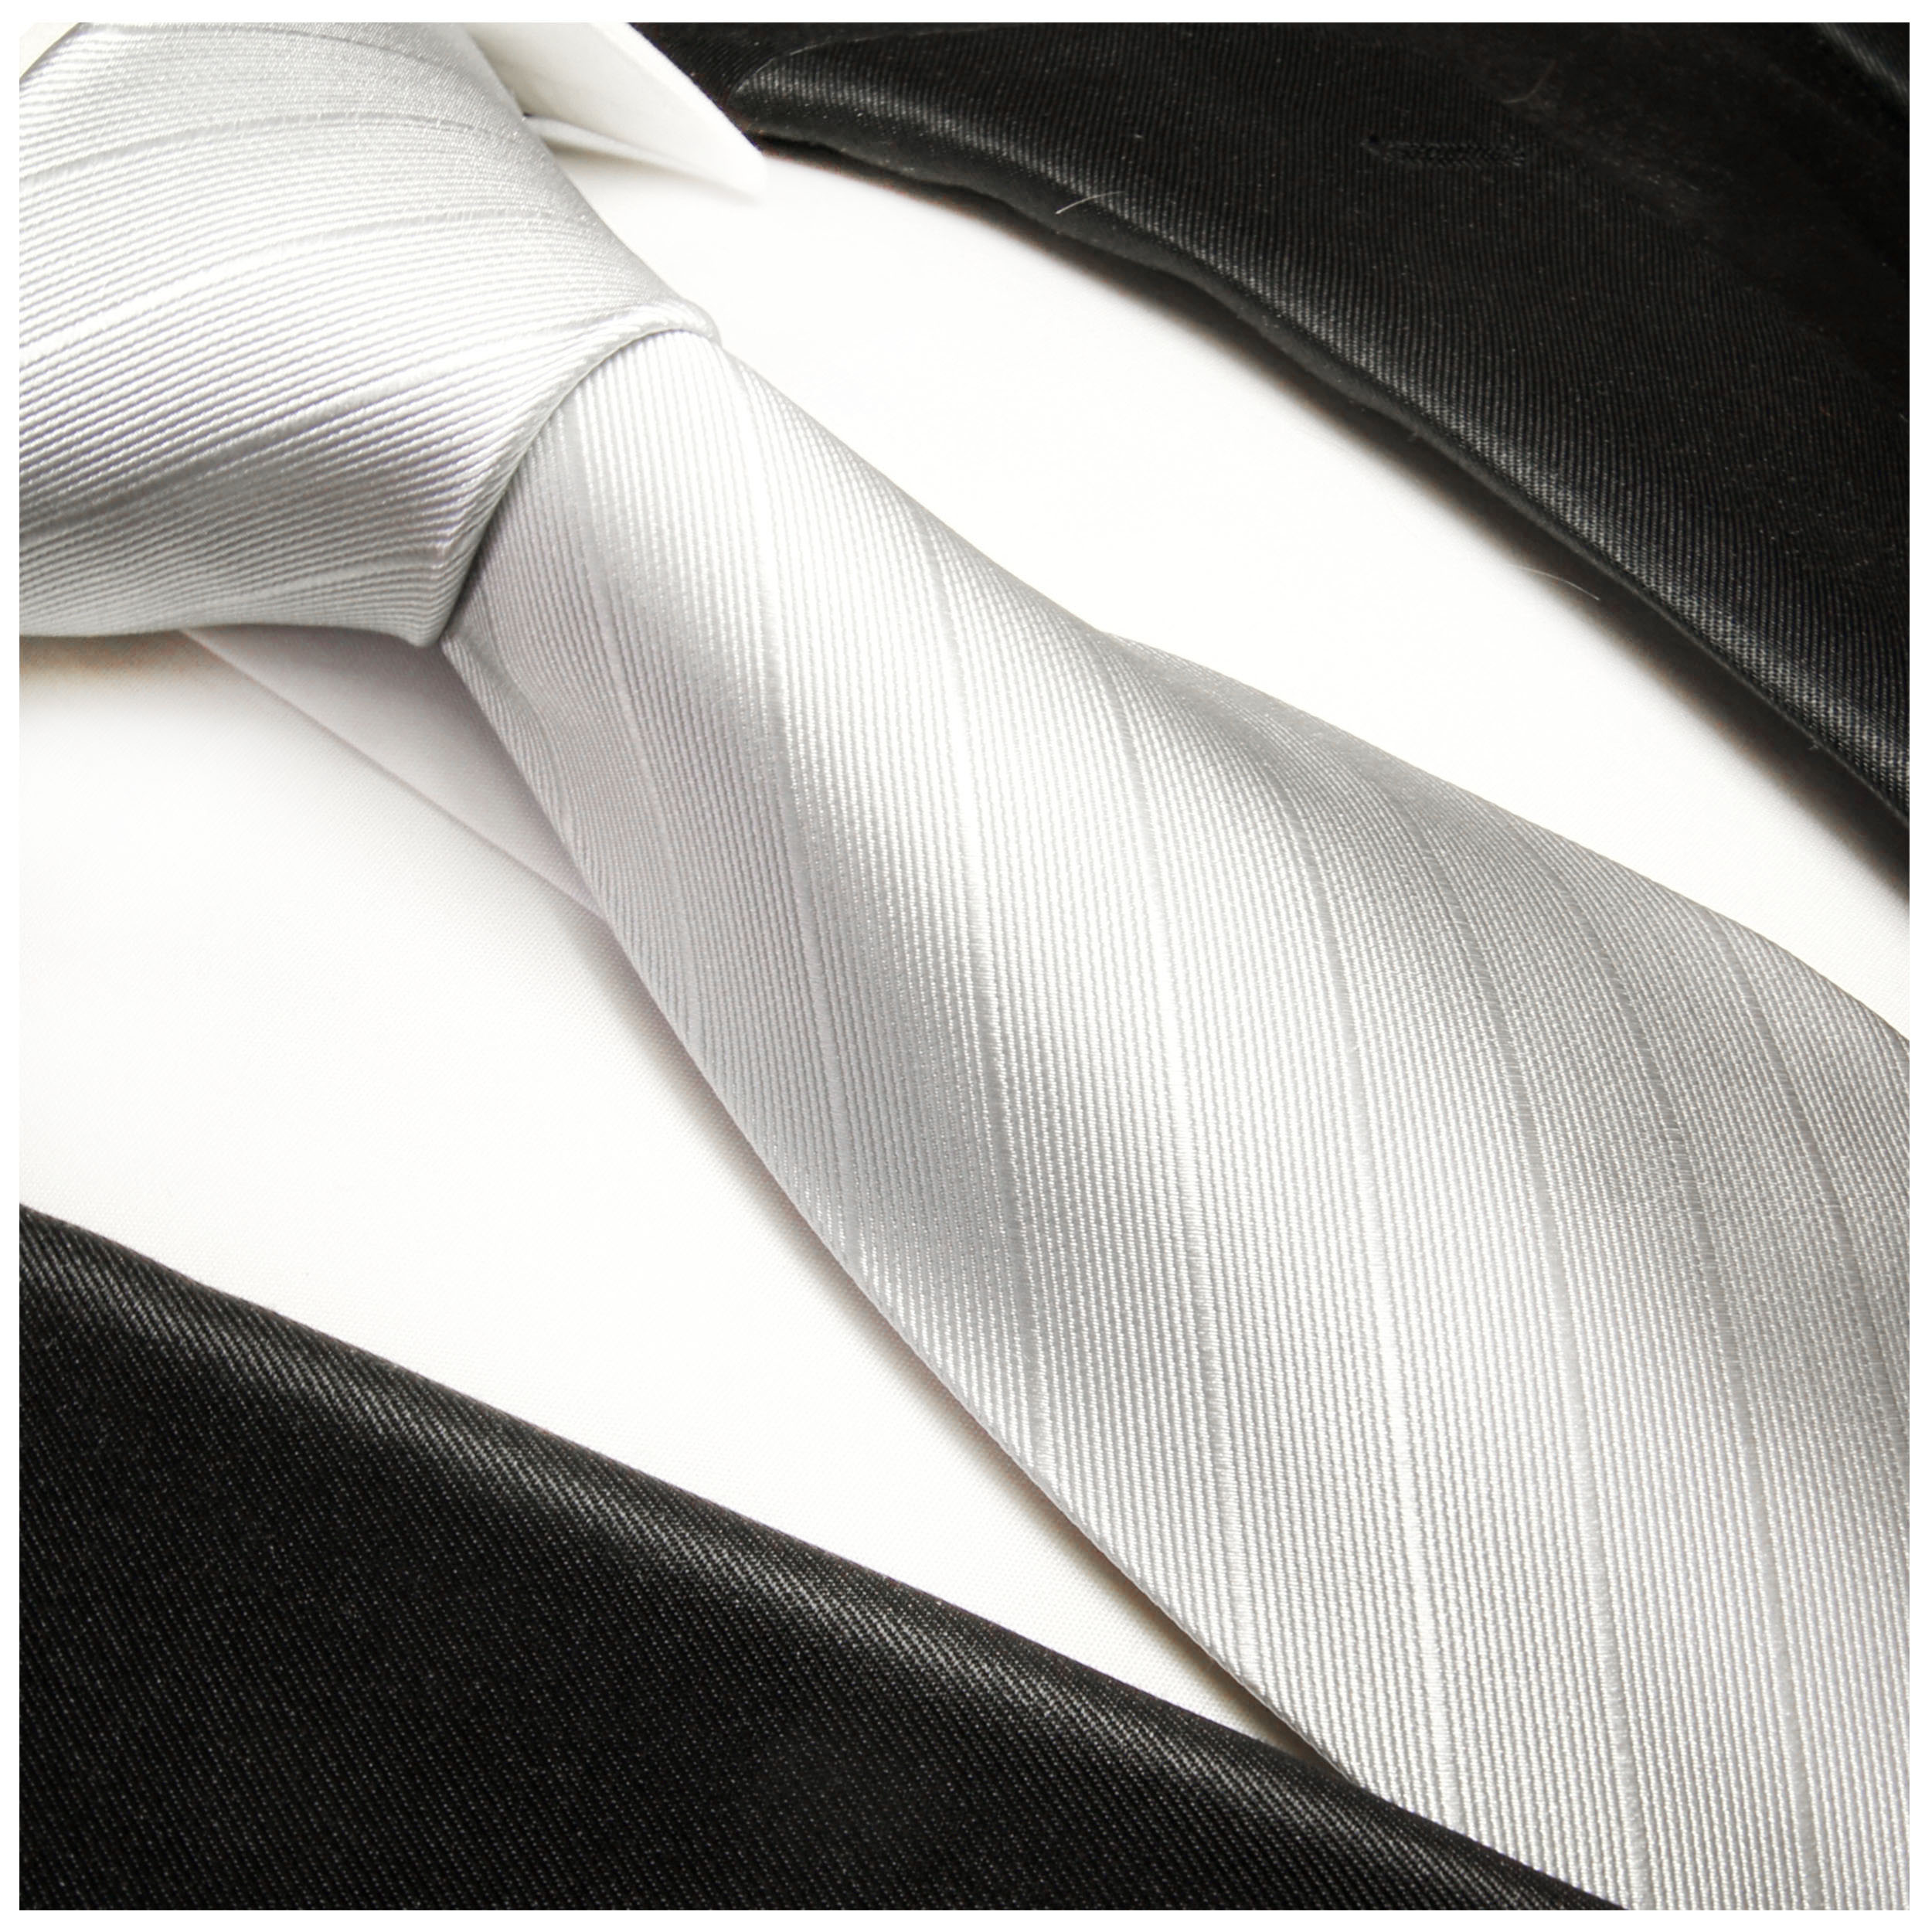 Krawatte silber uni gestreift | -50% | HIER KLICKEN - Paul Malone Shop